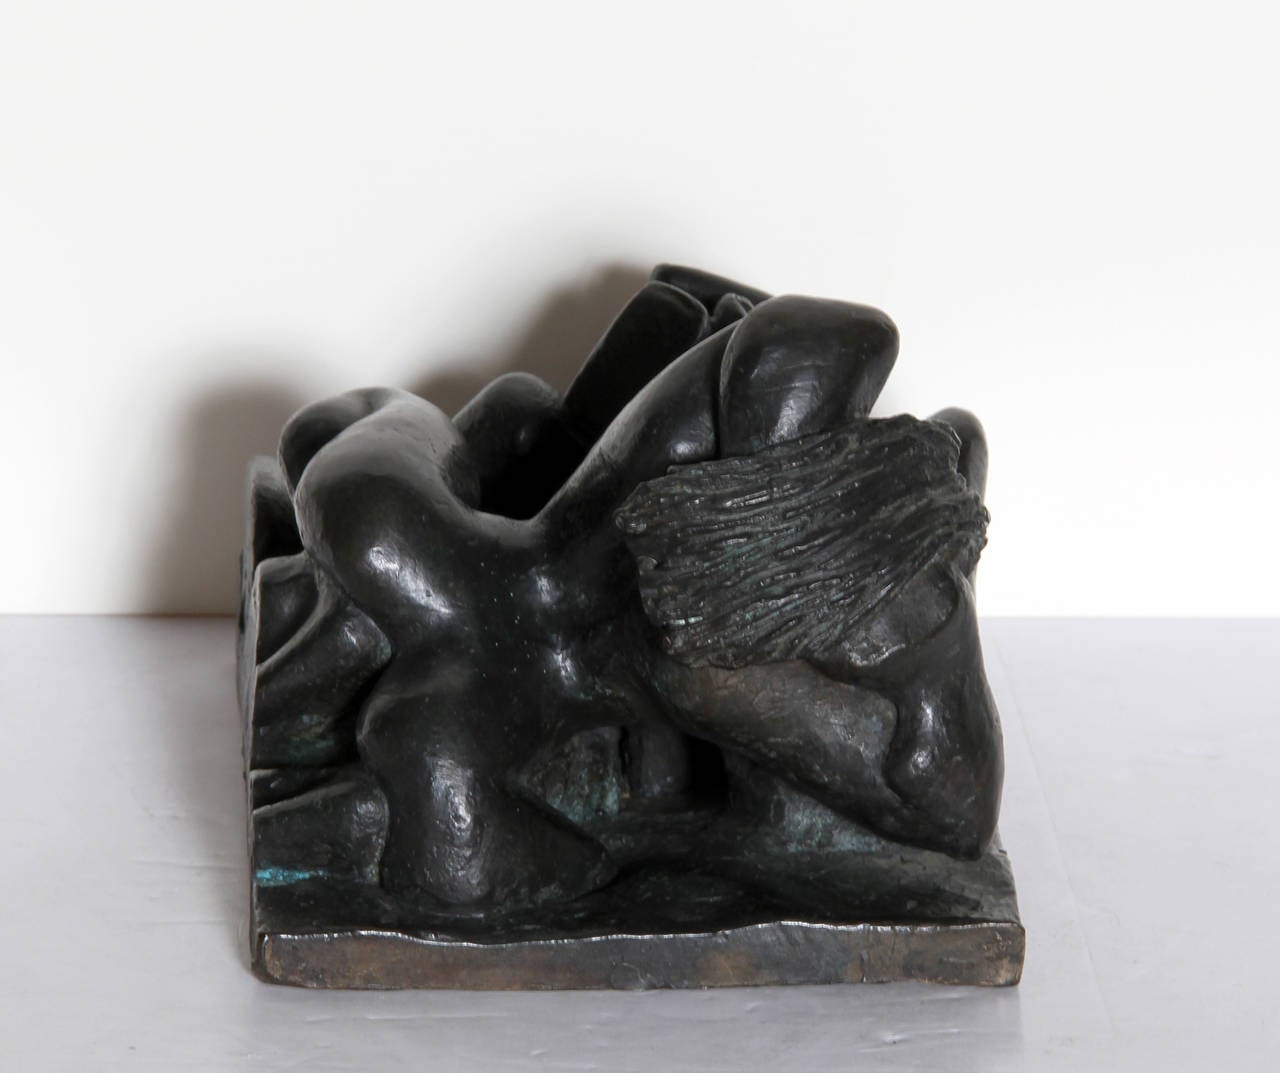 Artist: Lee Stoliar, American (1956 - )
Title: Untitled
Medium: Bronze Sculpture, signature inscribed
Size: 6.5 in. x 7 in. x 9 in. (16.51 cm x 17.78 cm x 22.86 cm)